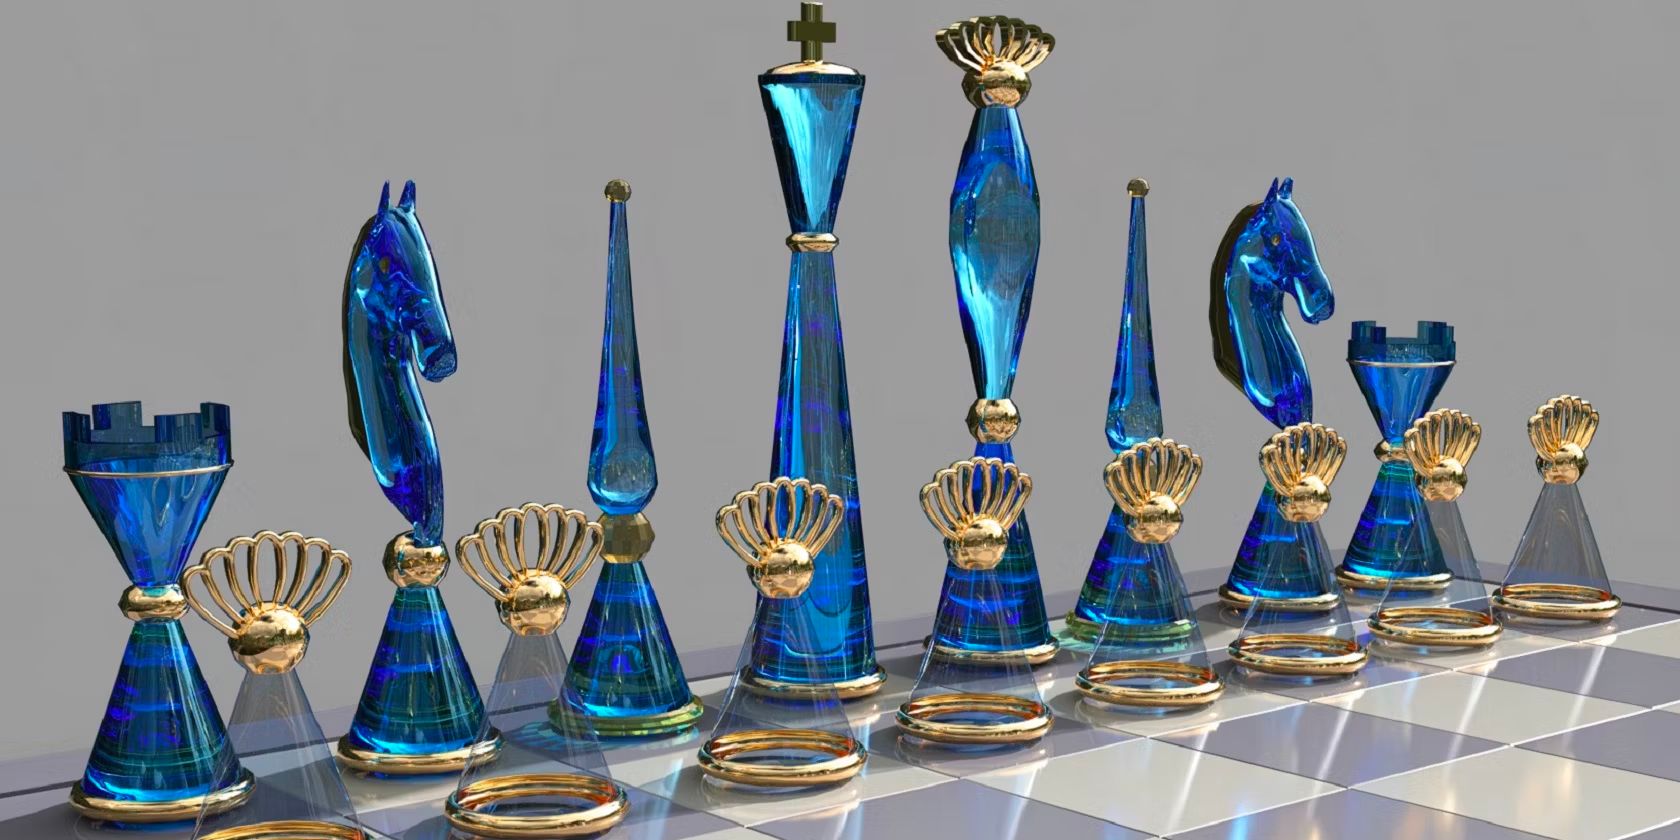 blue chess set